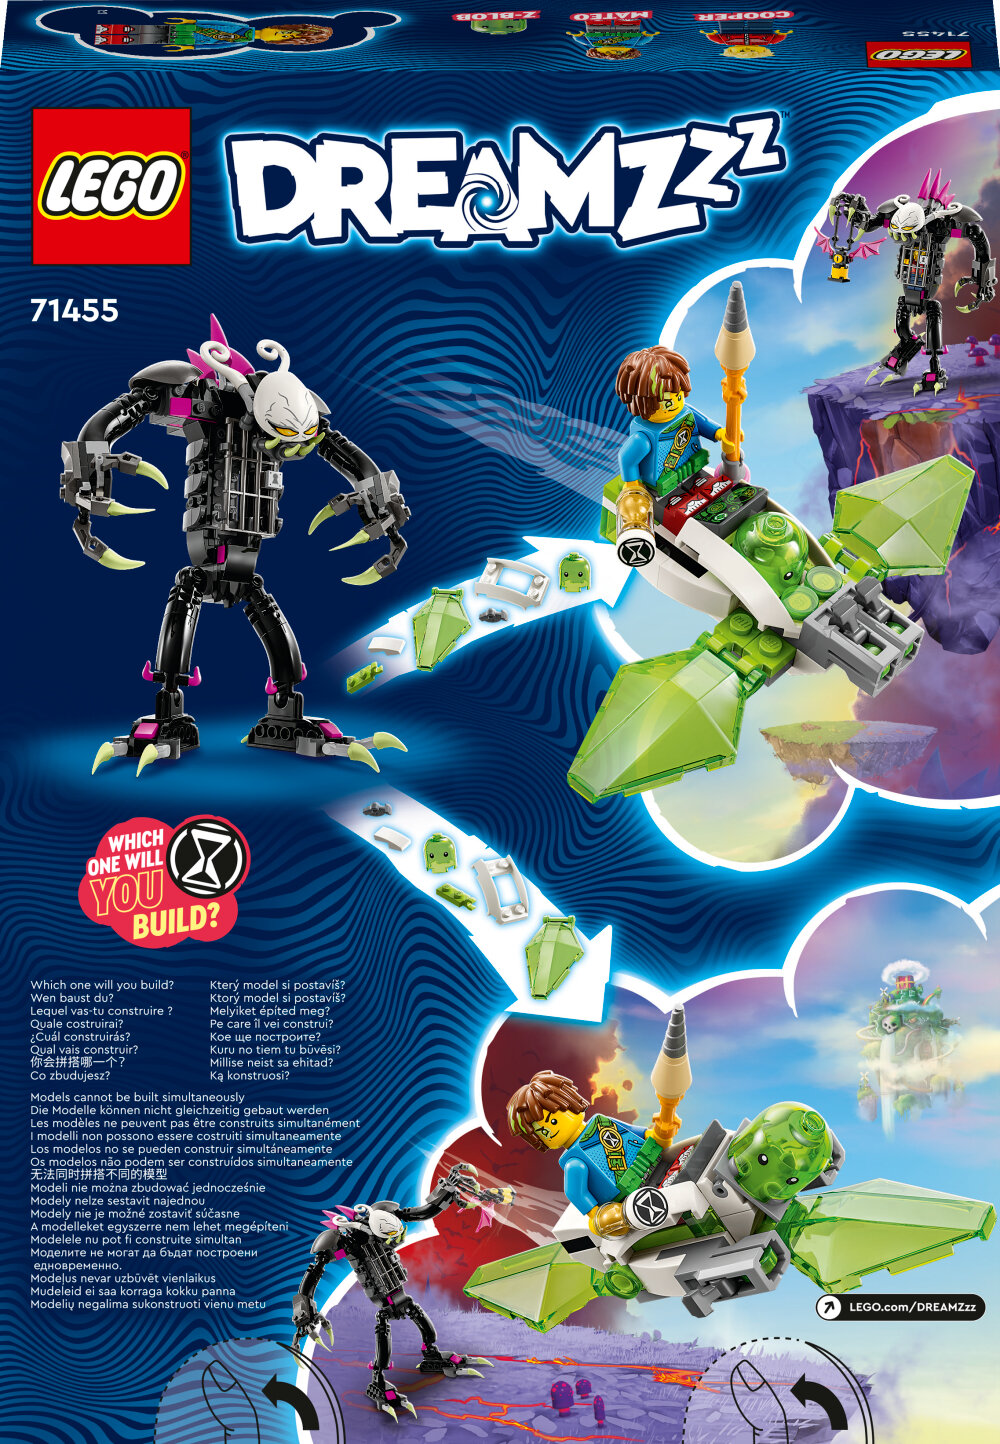 LEGO Dreamzzz - Burmonstret Grimkeeper 7+